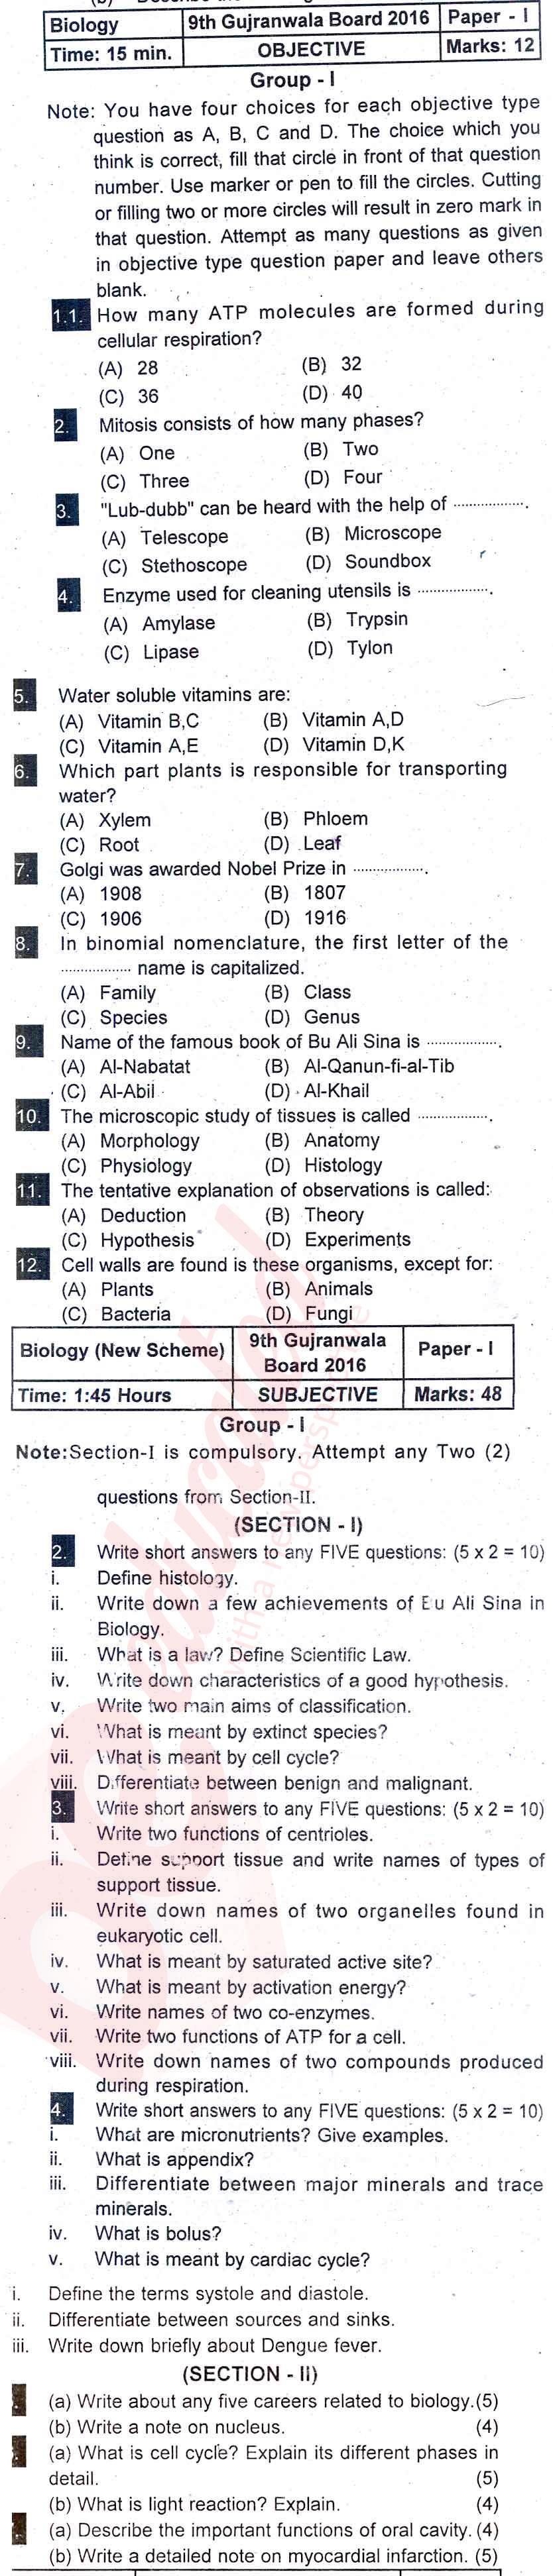 Biology 9th English Medium Past Paper Group 1 BISE Gujranwala 2016